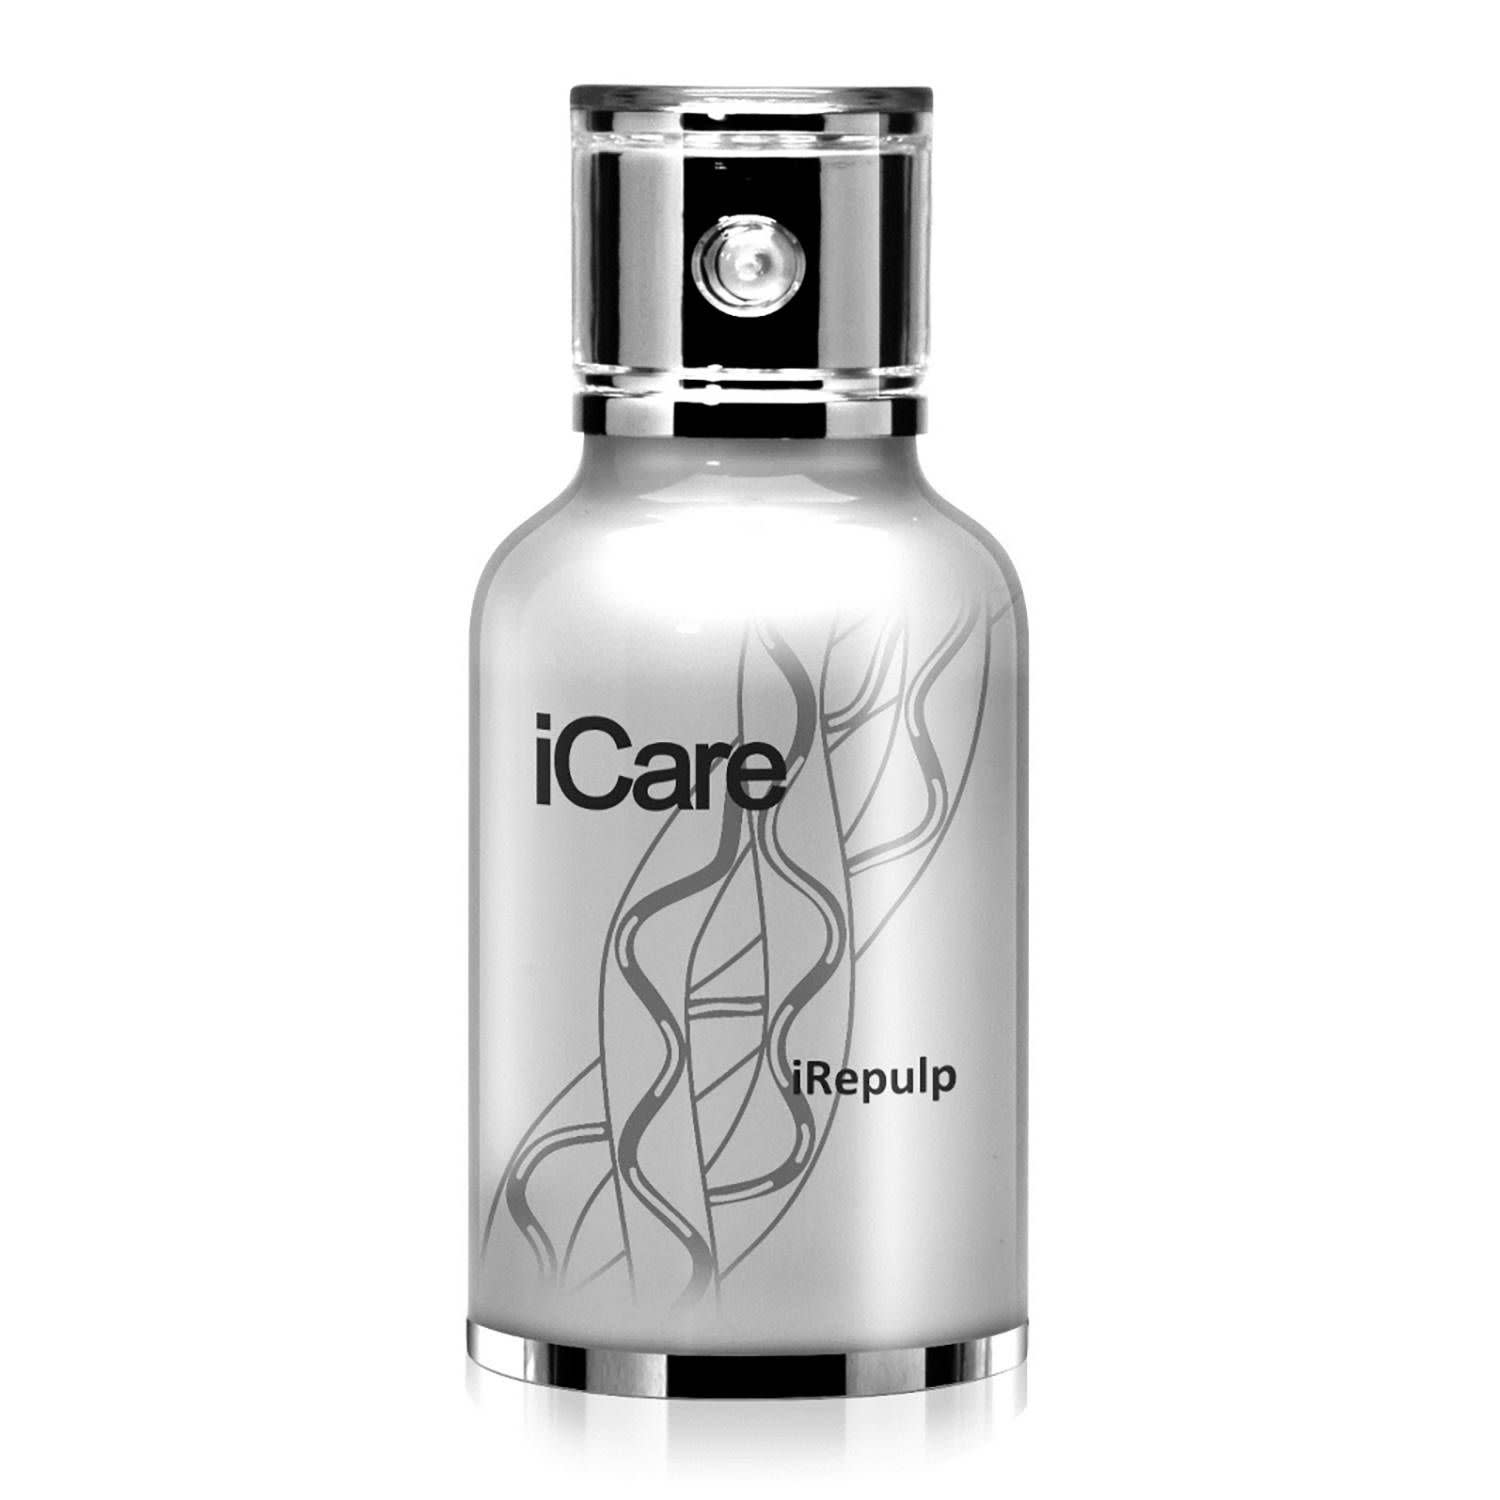 iCare iRepulp Crema Repulp Viso - Jasmine Parfums- [ean]